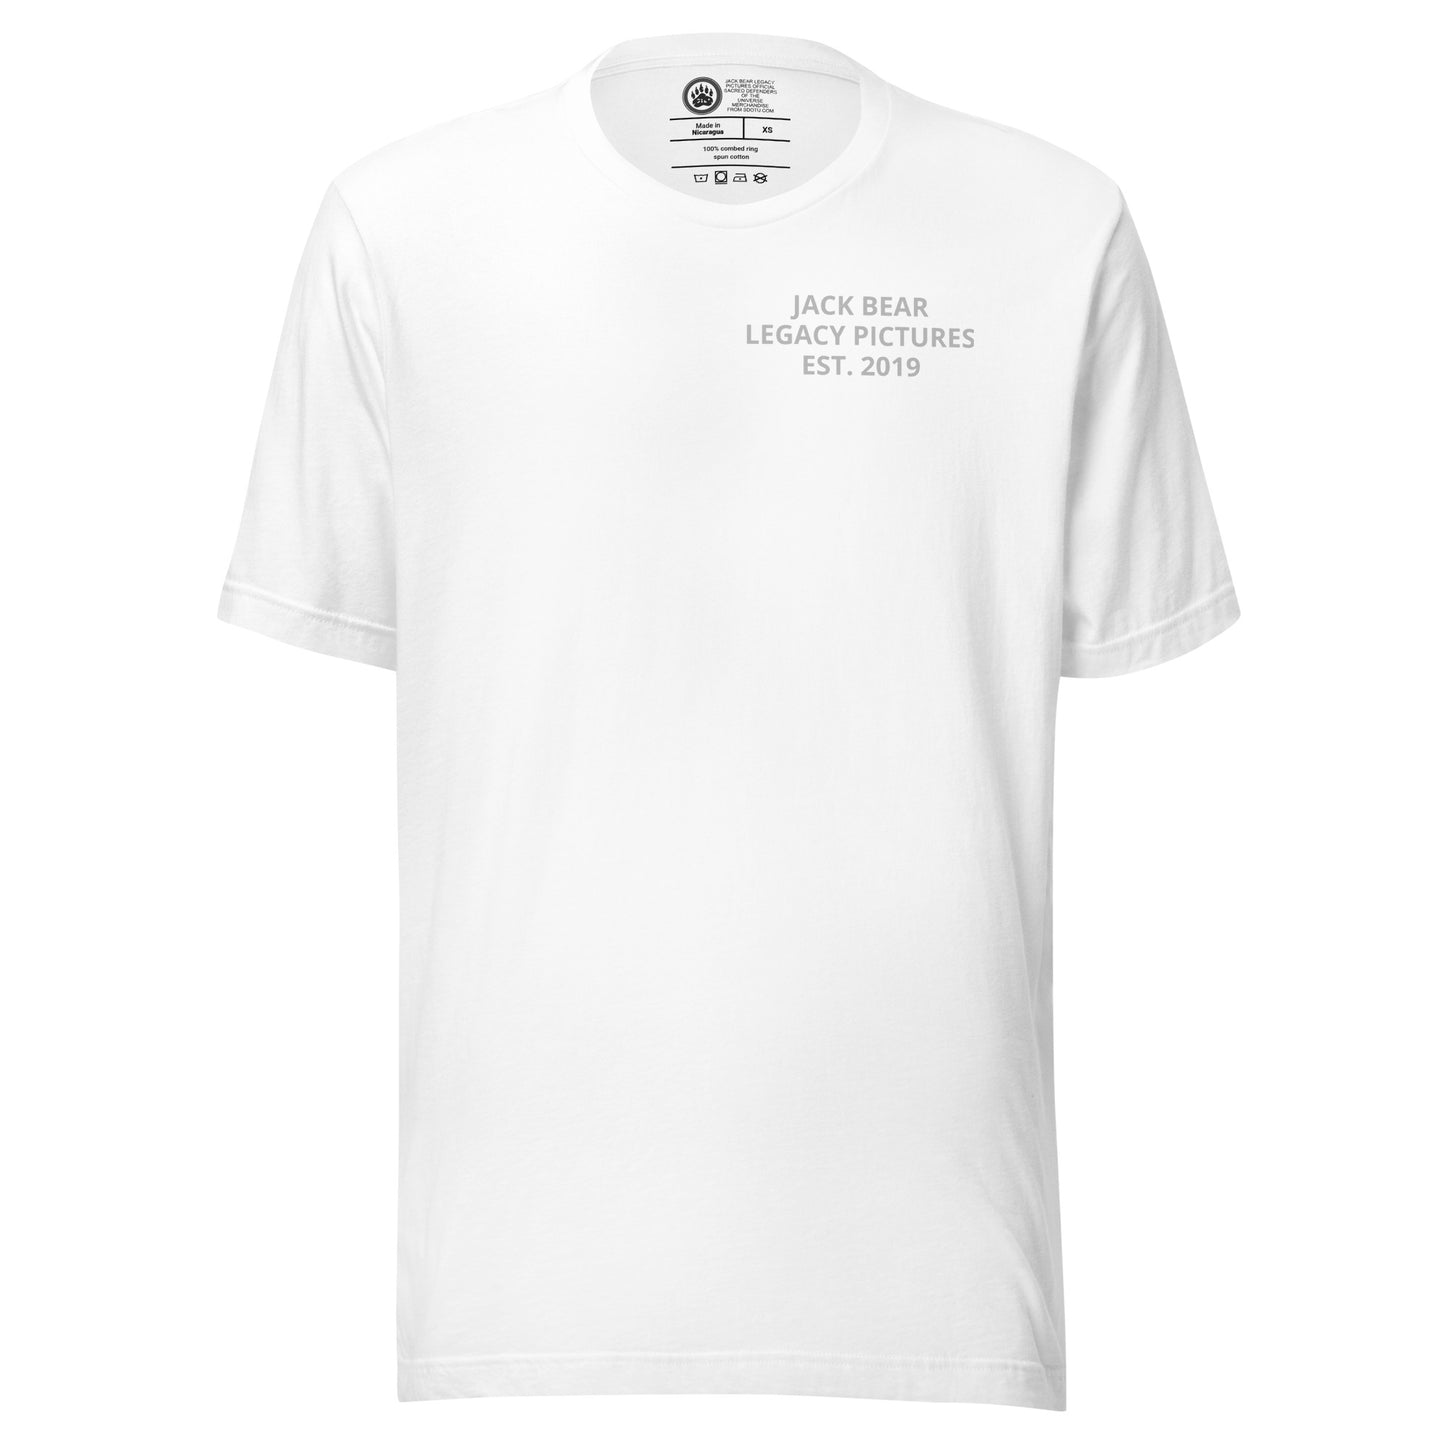 Unisex Jack Bear Legacy Pictures (JBLP) t-shirt